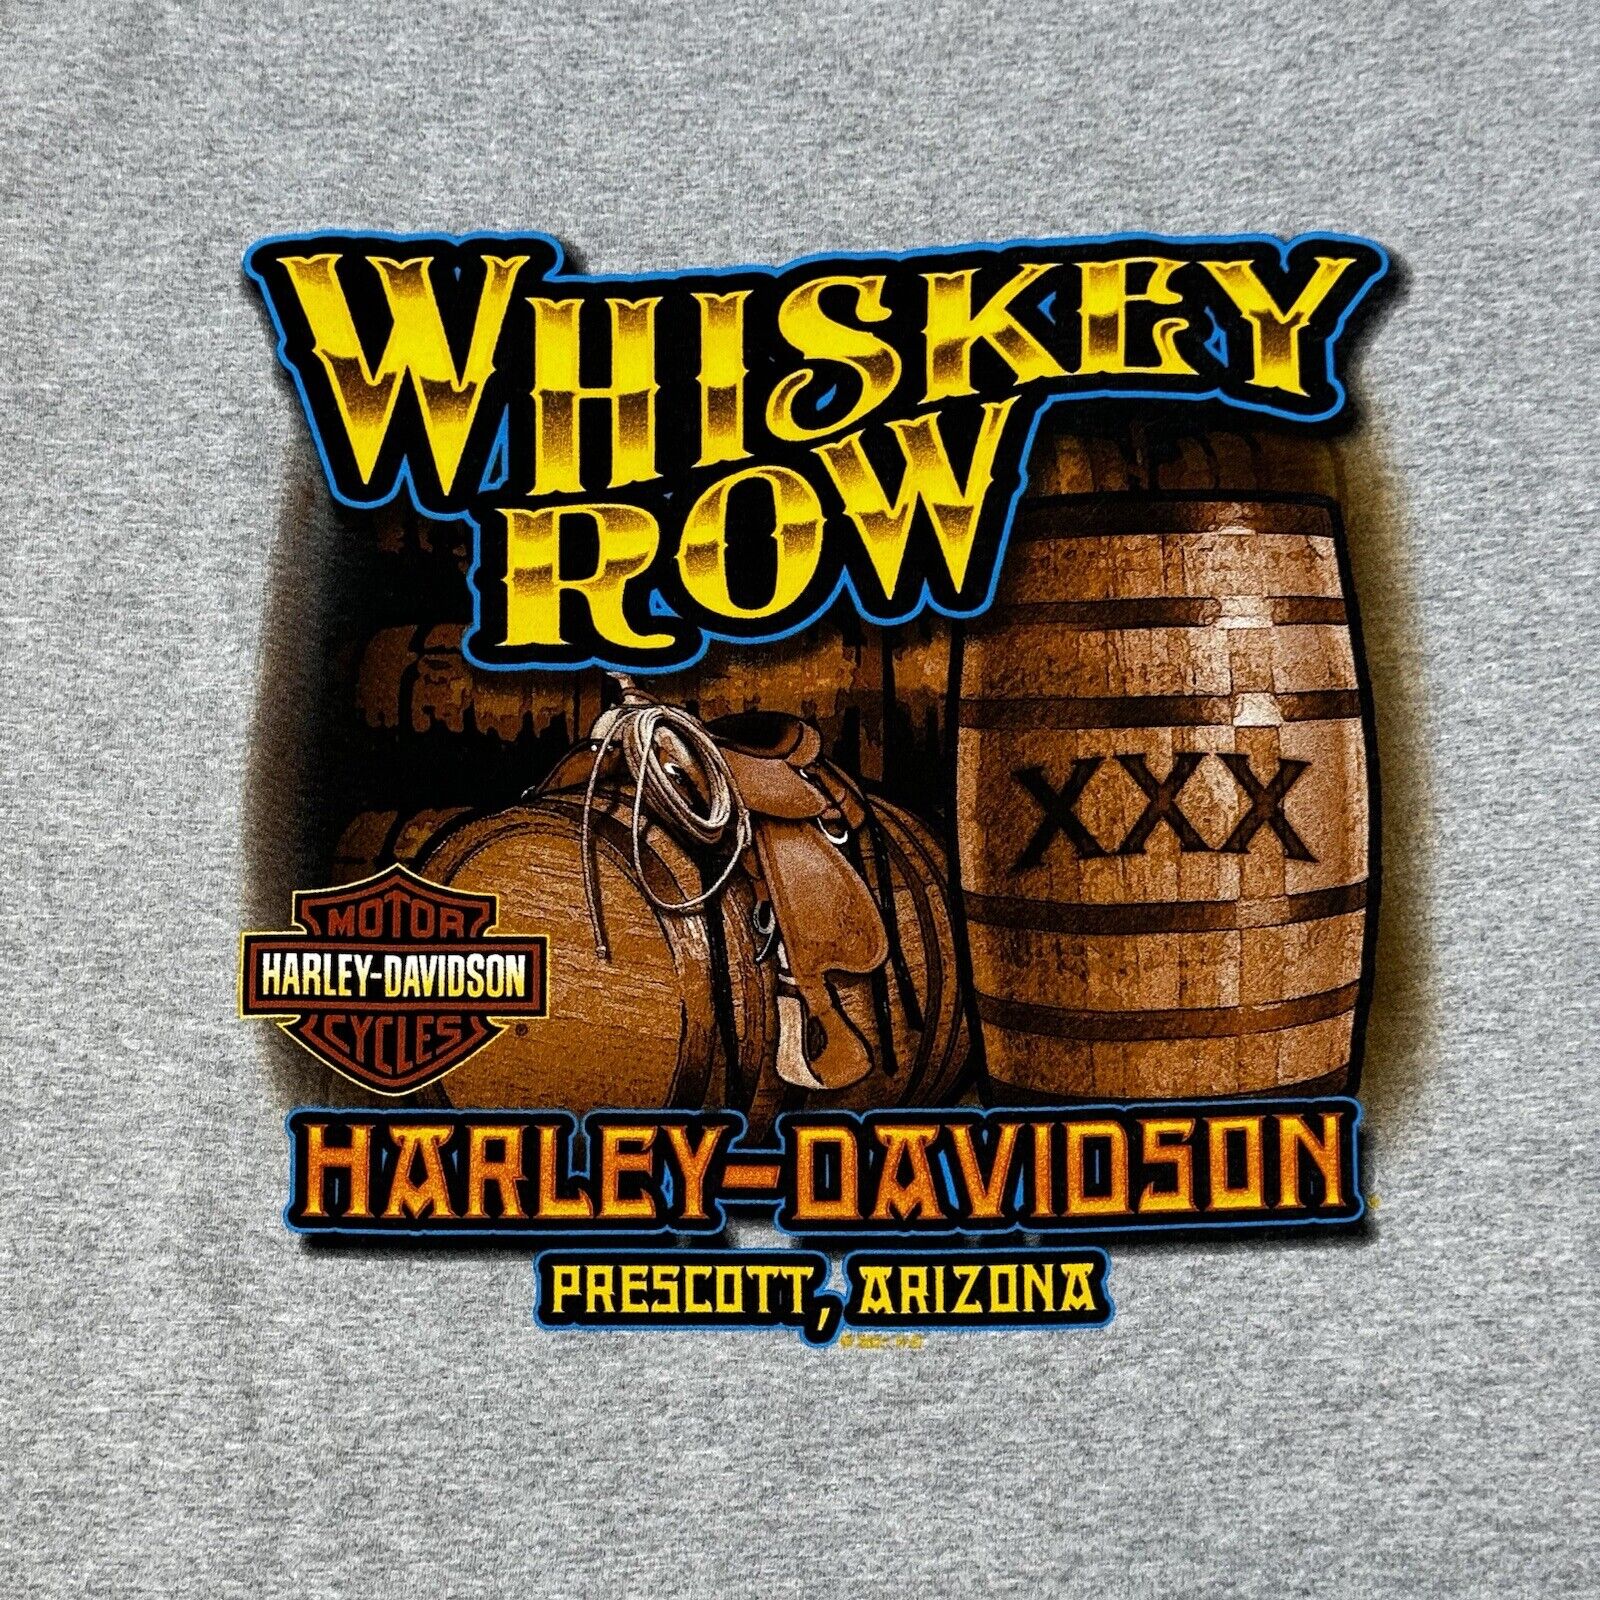 Harley Davidson Shirt Mens XL Whiskey Row Prescott Arizona Double Sided Graphic